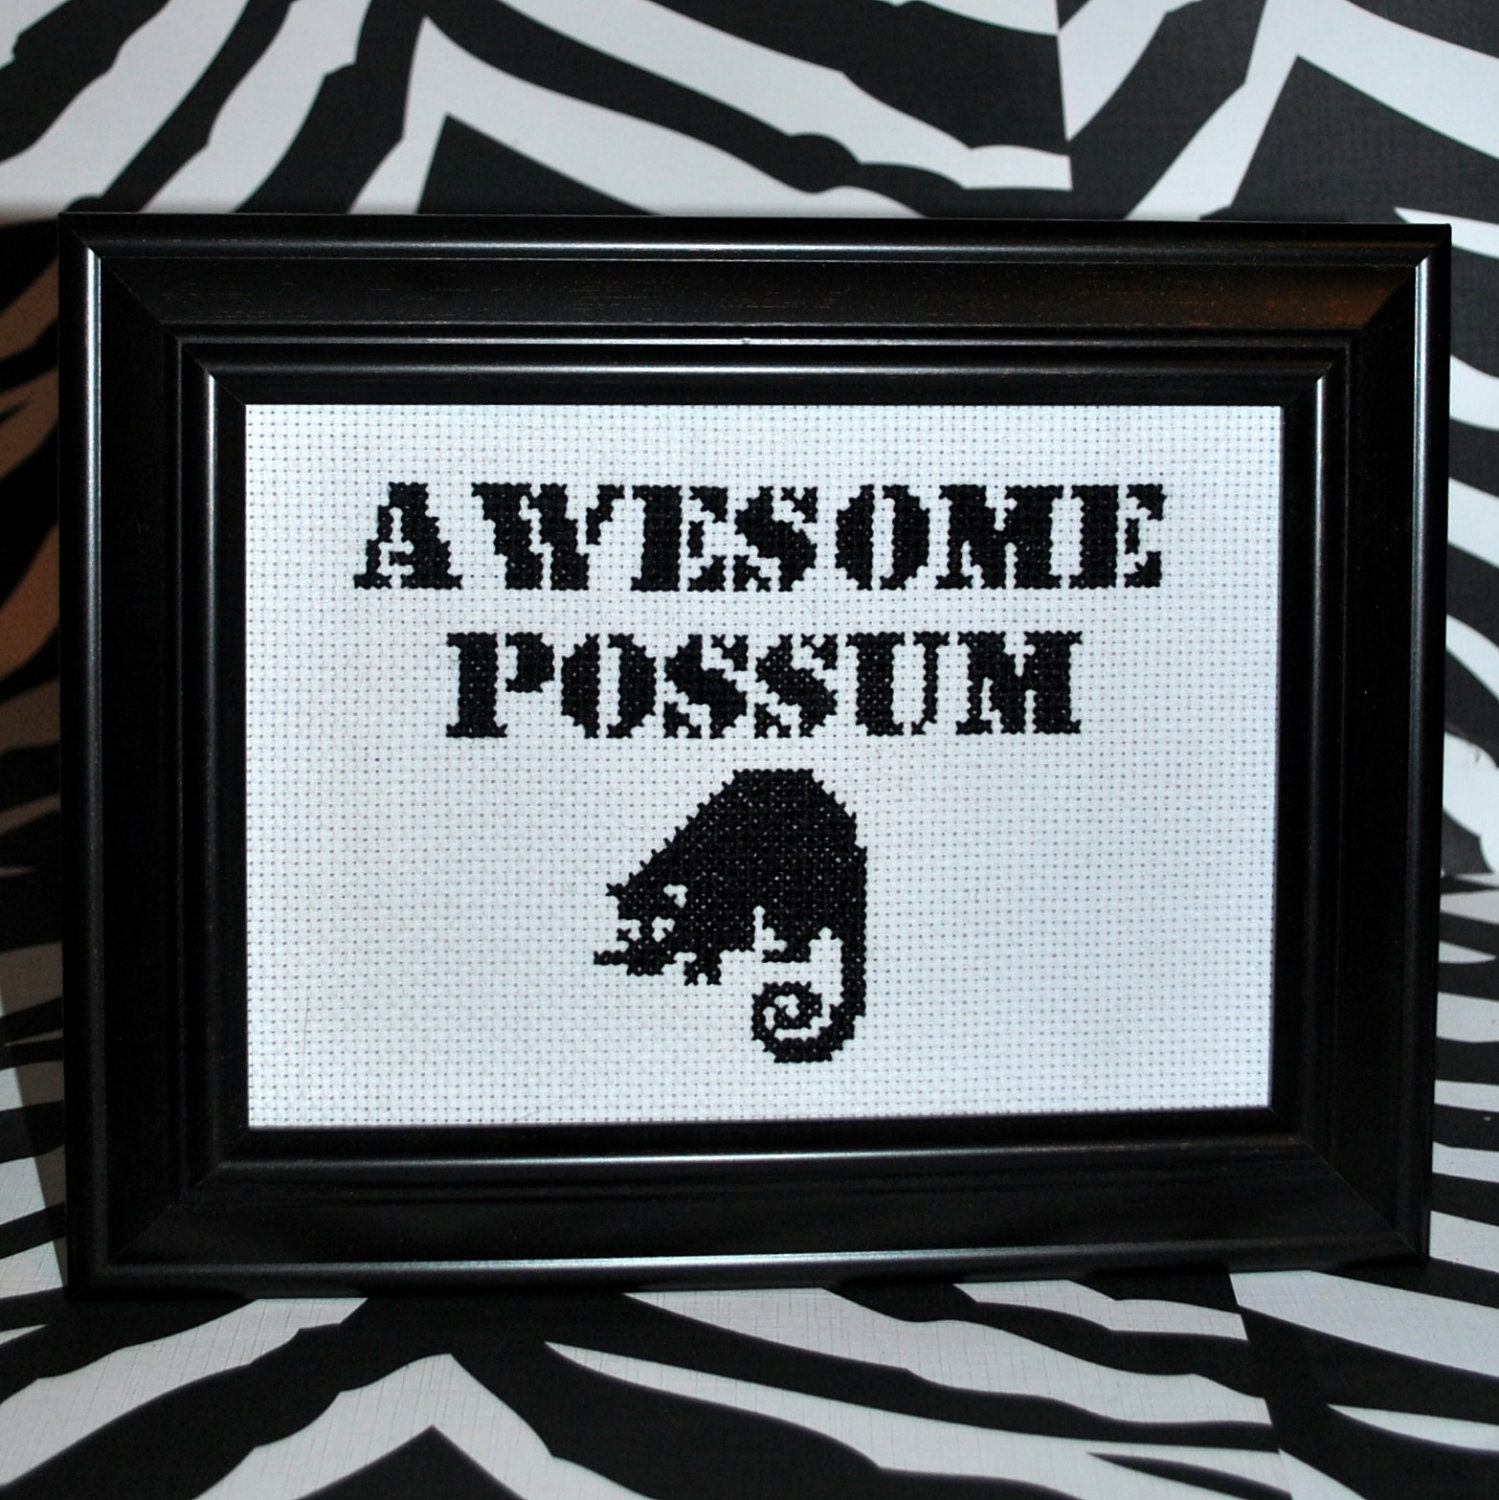 Awesome Possum Framed Cross Stitch